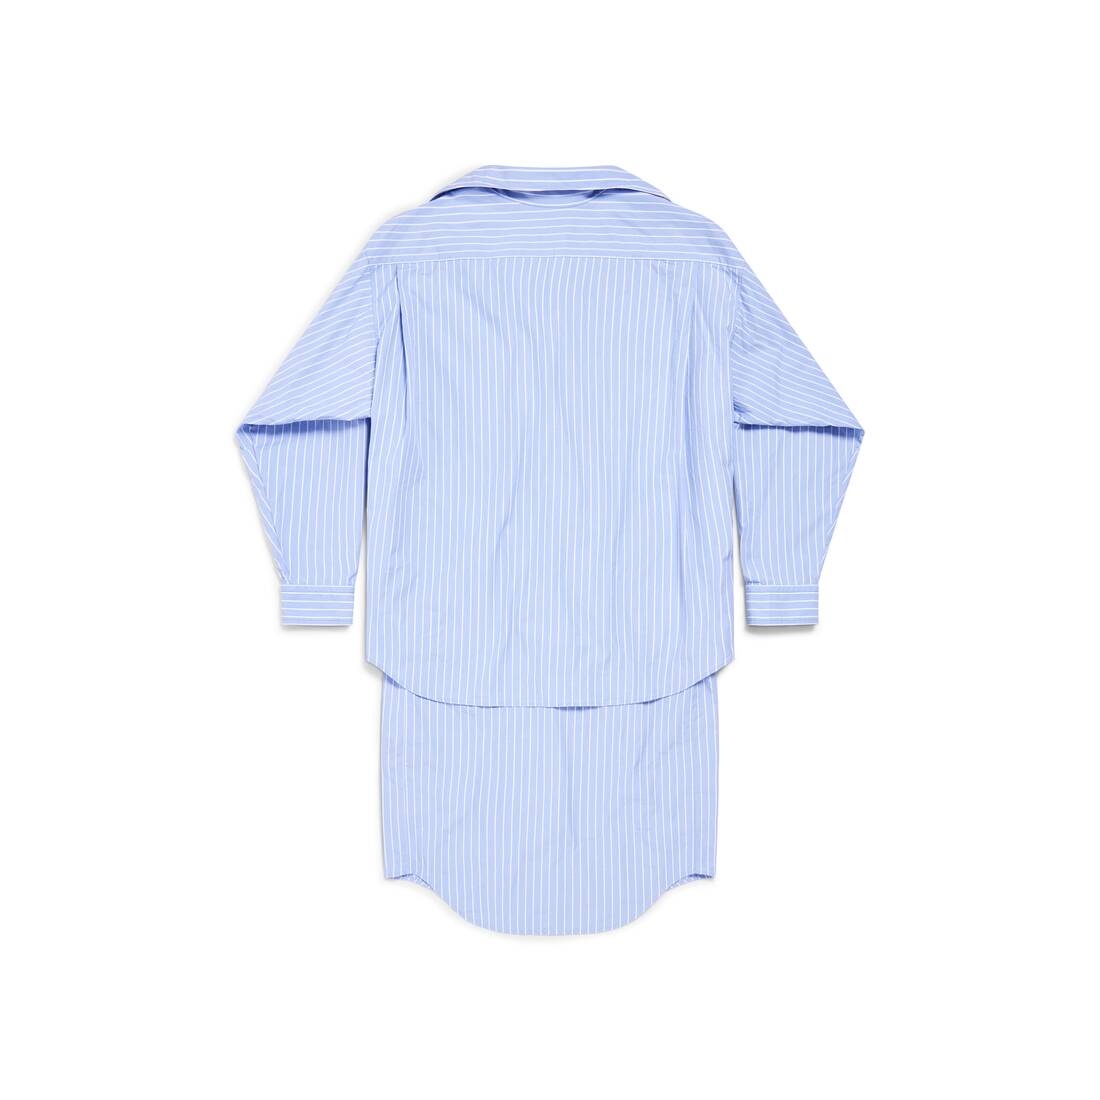 Women's Bb Classic Layered Shirt Dress in Light Blue/white - 7